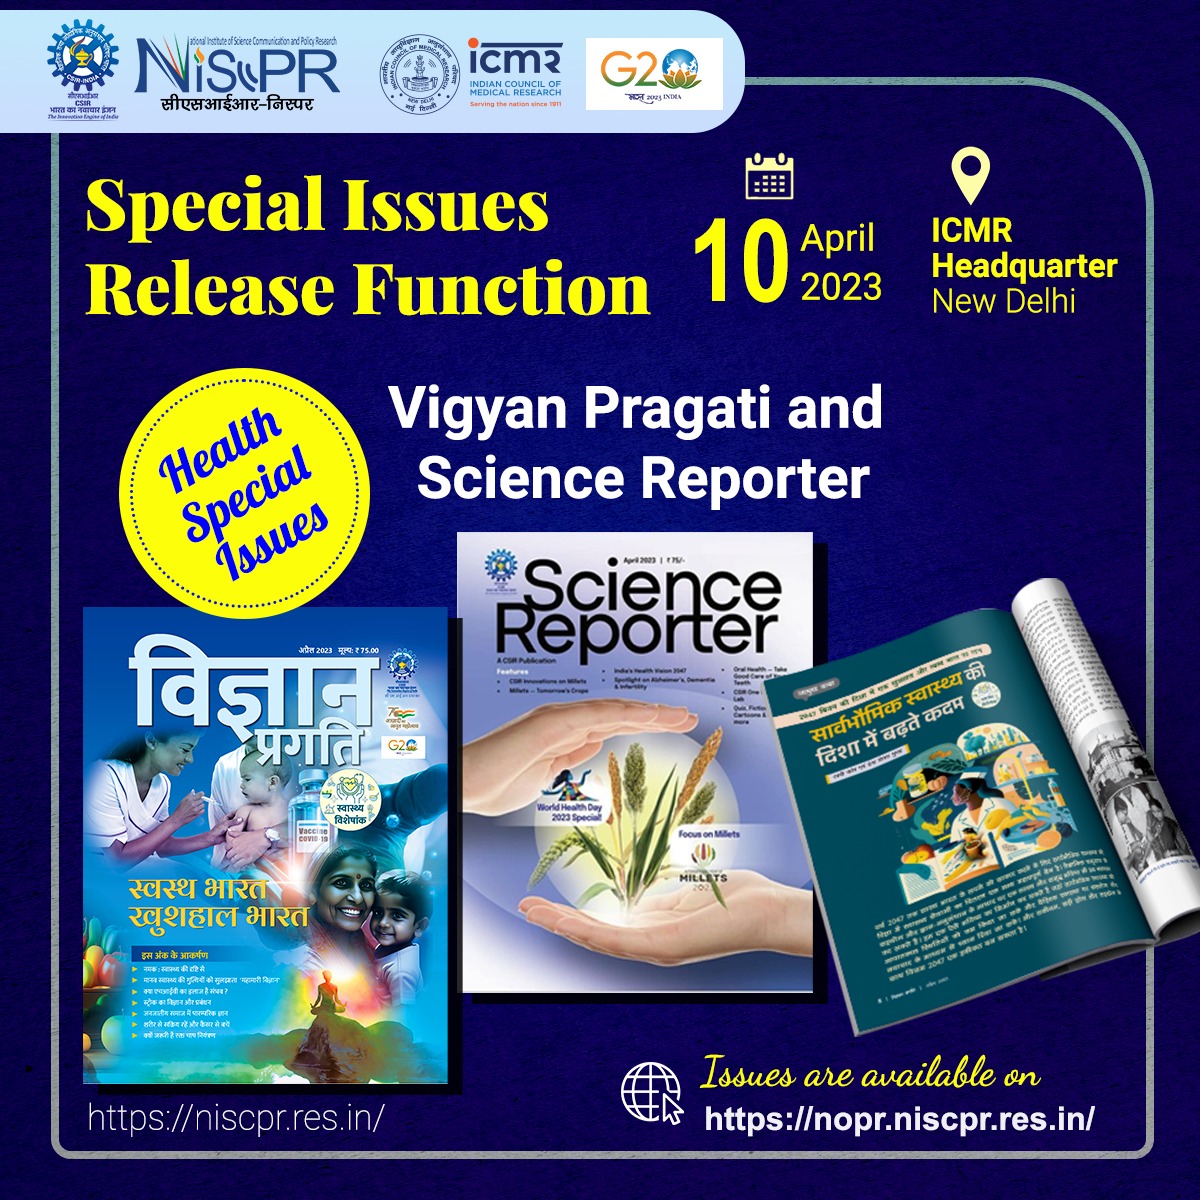 Health special issues of the popular science magazines @VigyanPragati & @ScienceReporte1 will be released tomorrow @ICMRDELHI 

@CSIR_IND @CSIR_NIScPRre @DeptHealthRes @Ranjana_23 @DoctorRajnikant @hjkhan @DrManishMohanG1 @ennadogra @KapilShubhada @SonaliNagar5 @NIScPR_SVASTIK